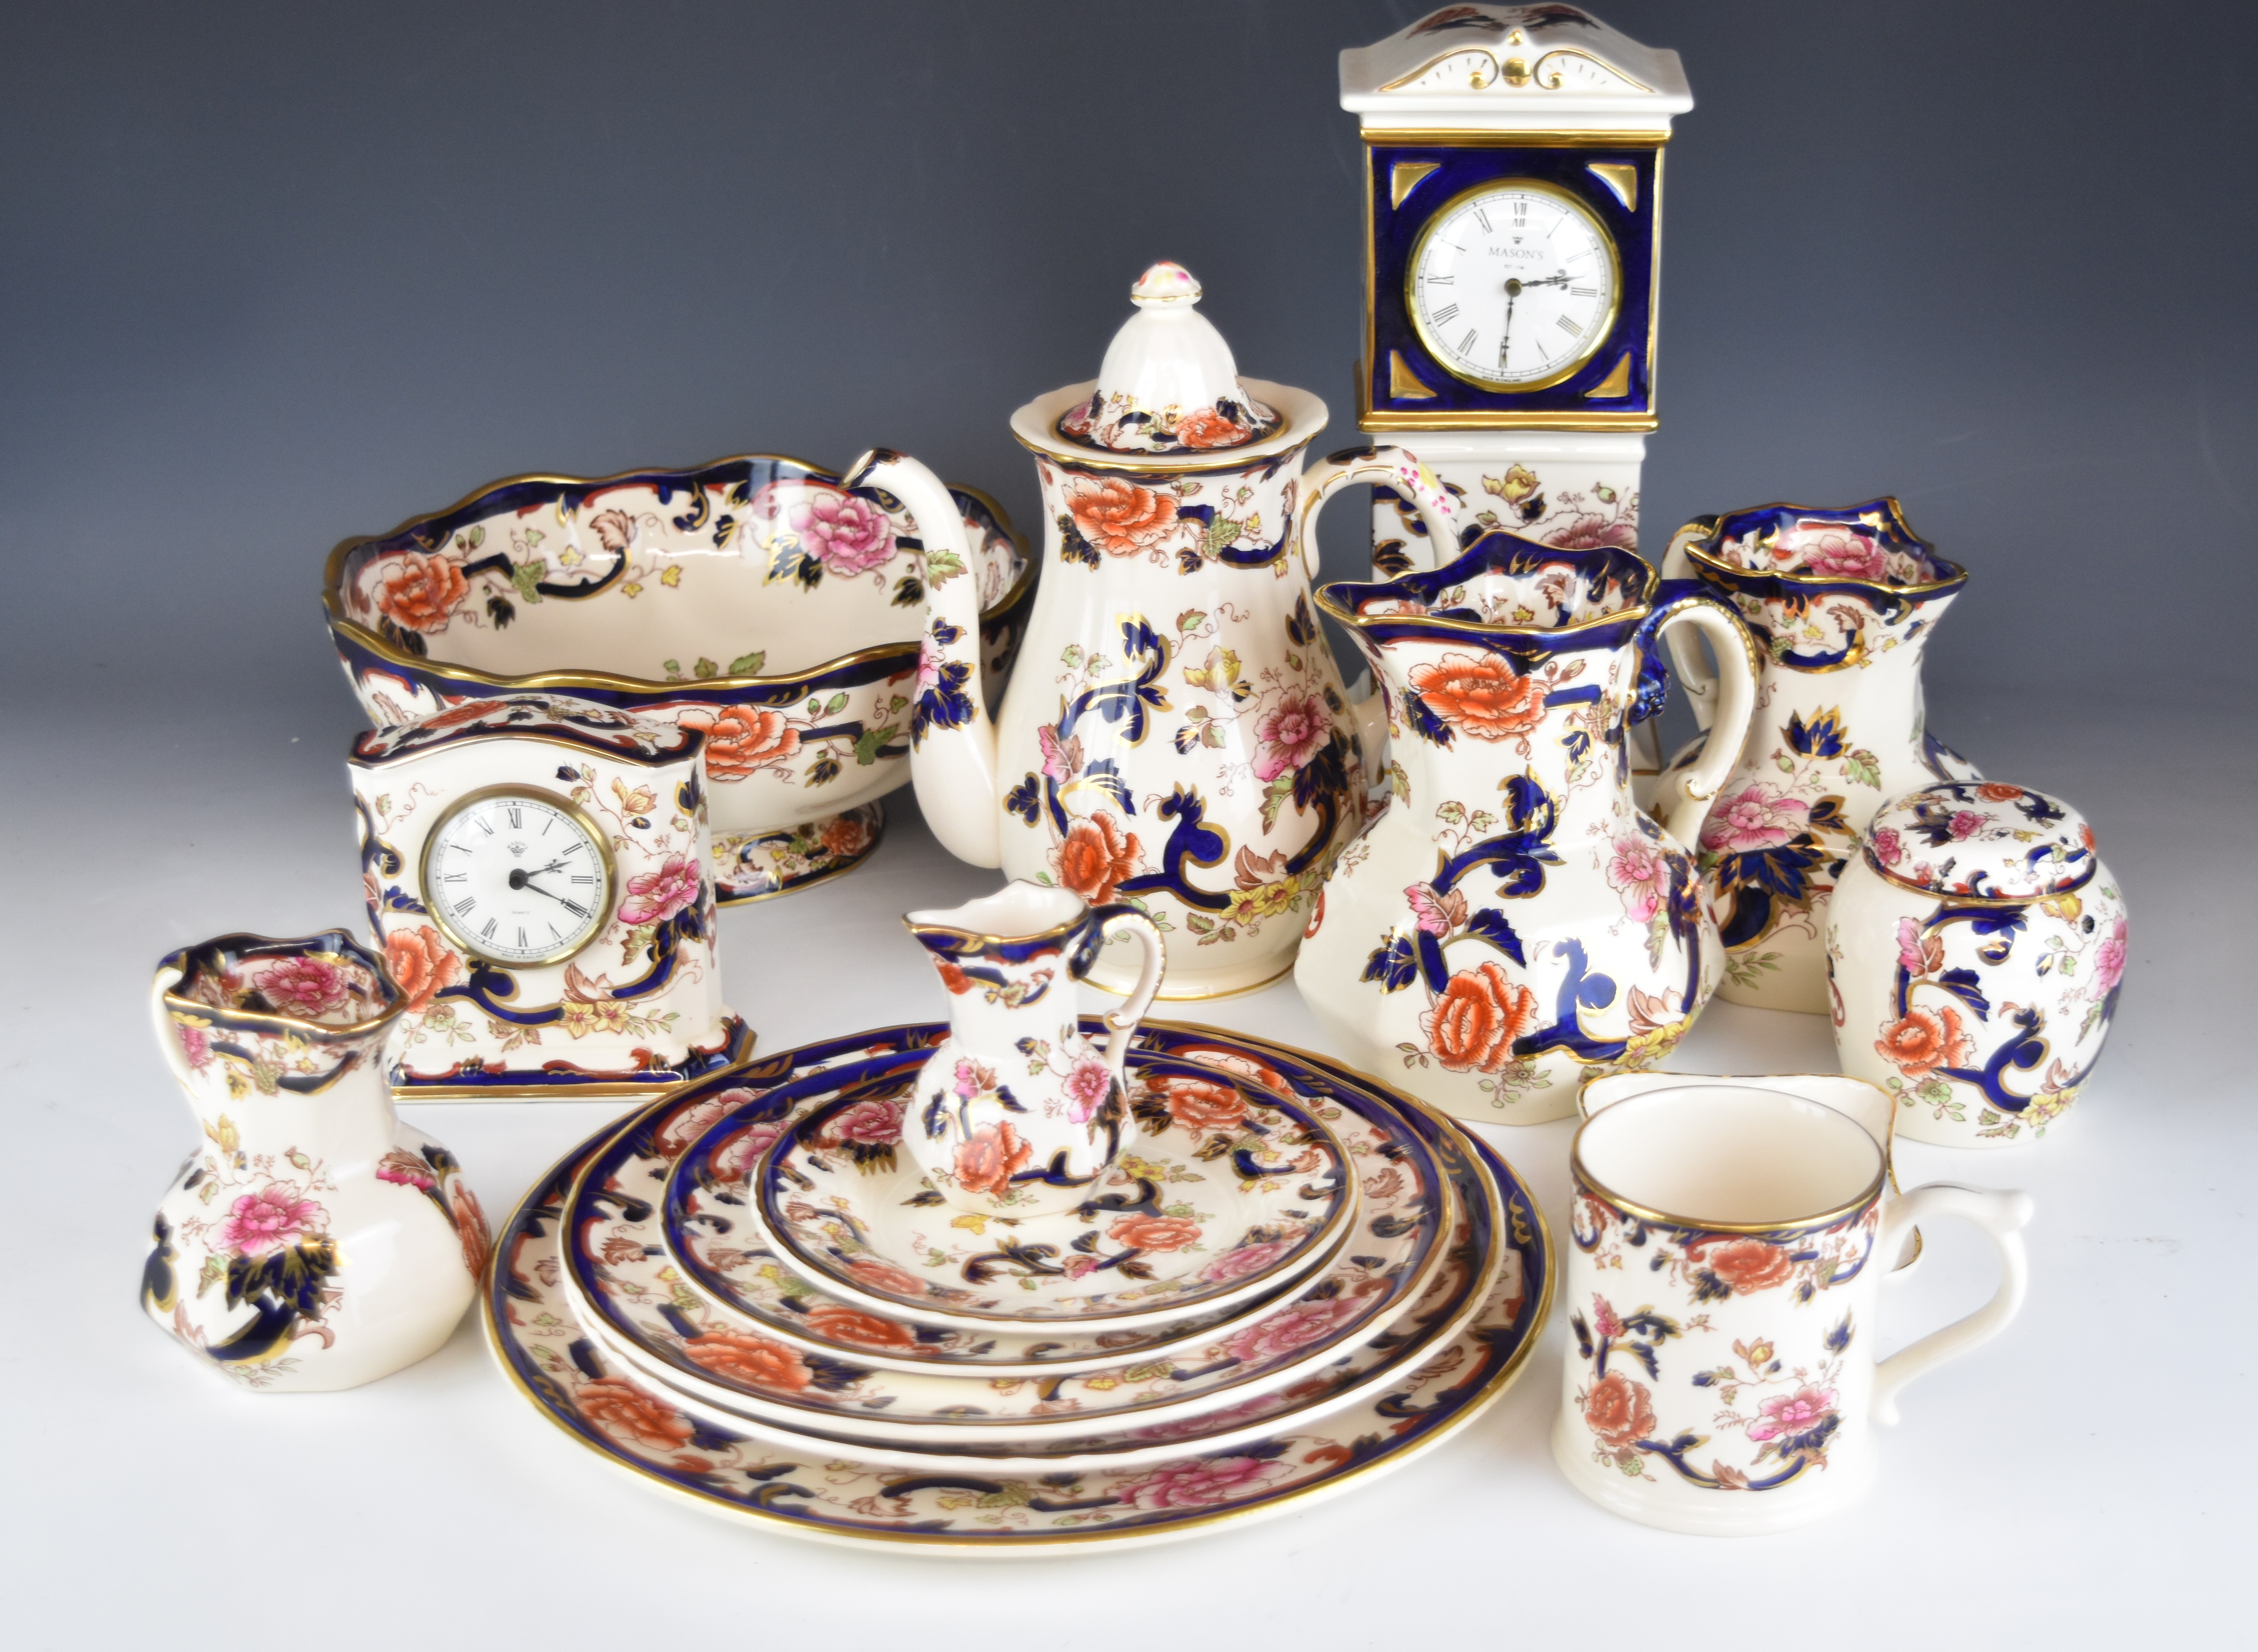 Masons decorative ceramics comprising longcase / grandfather clock, smaller clock, coffee pot,